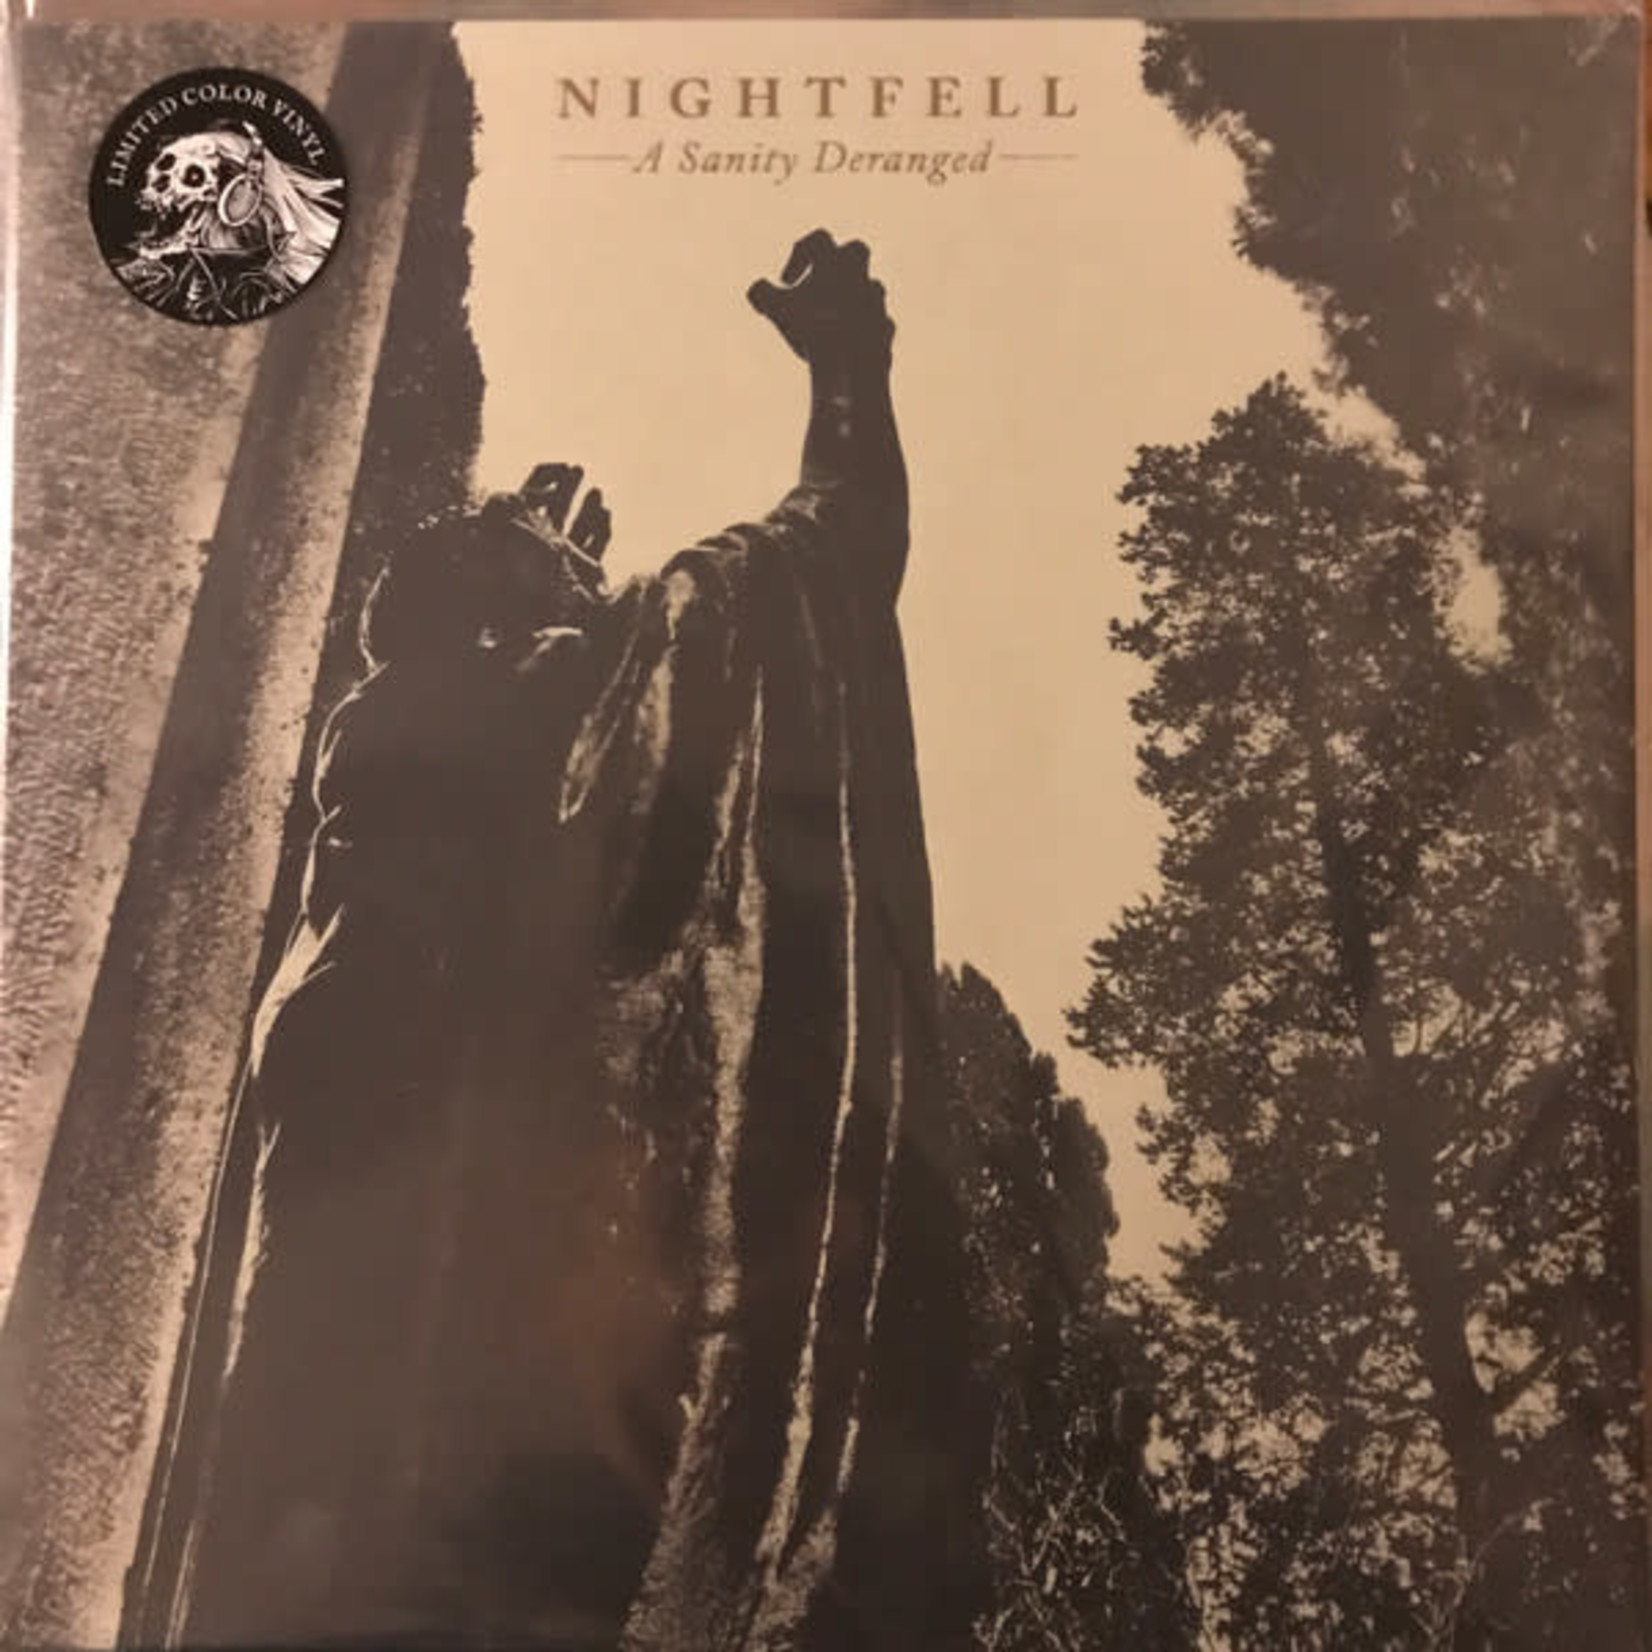 20 Buck Spin Nightfell - A Sanity Deranged (LP) [Gold/Brown]